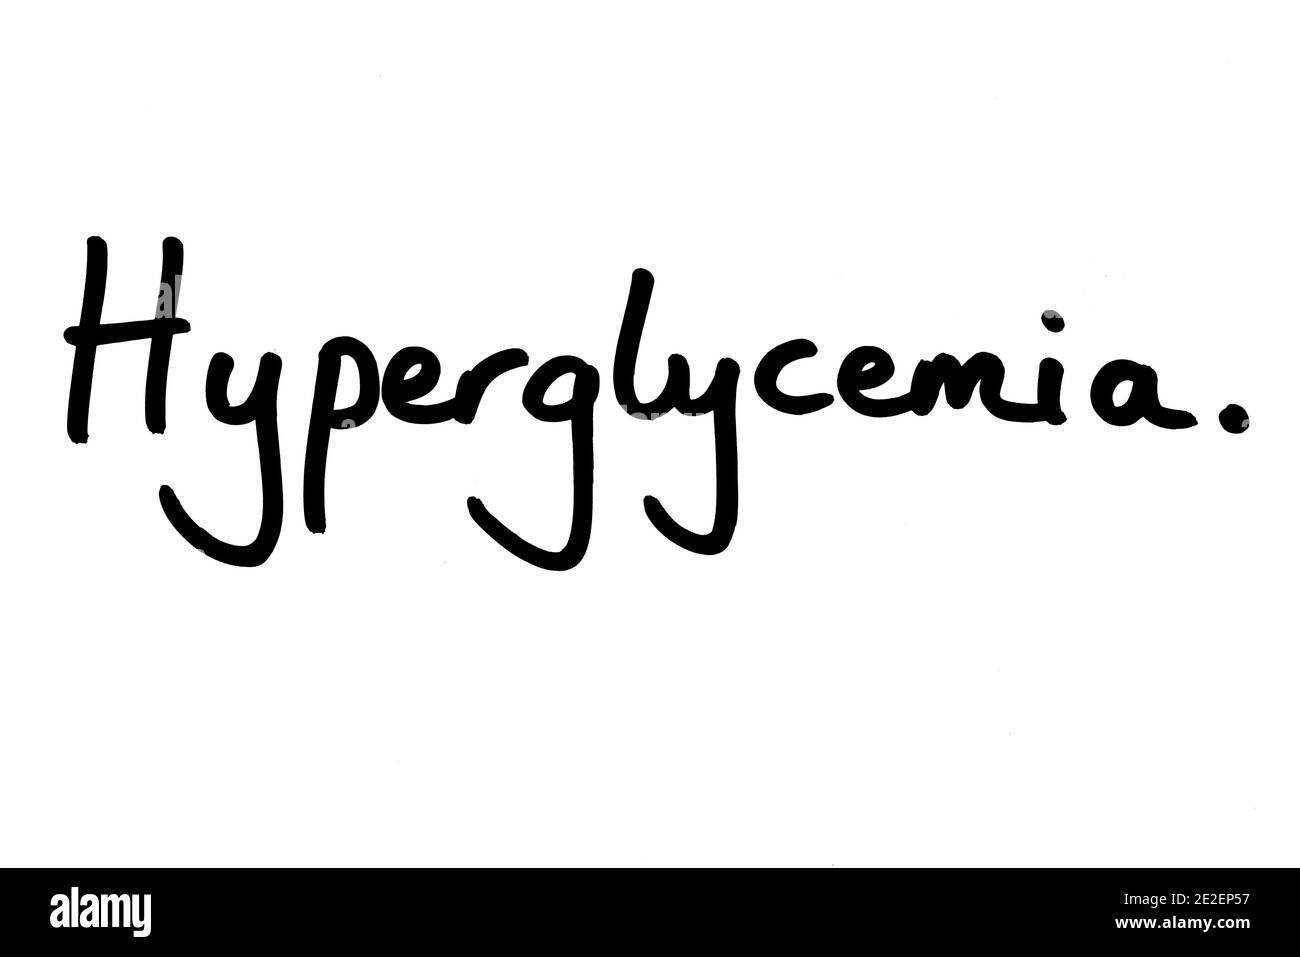 Hyperglycemia handwritten on a white background. Stock Photo